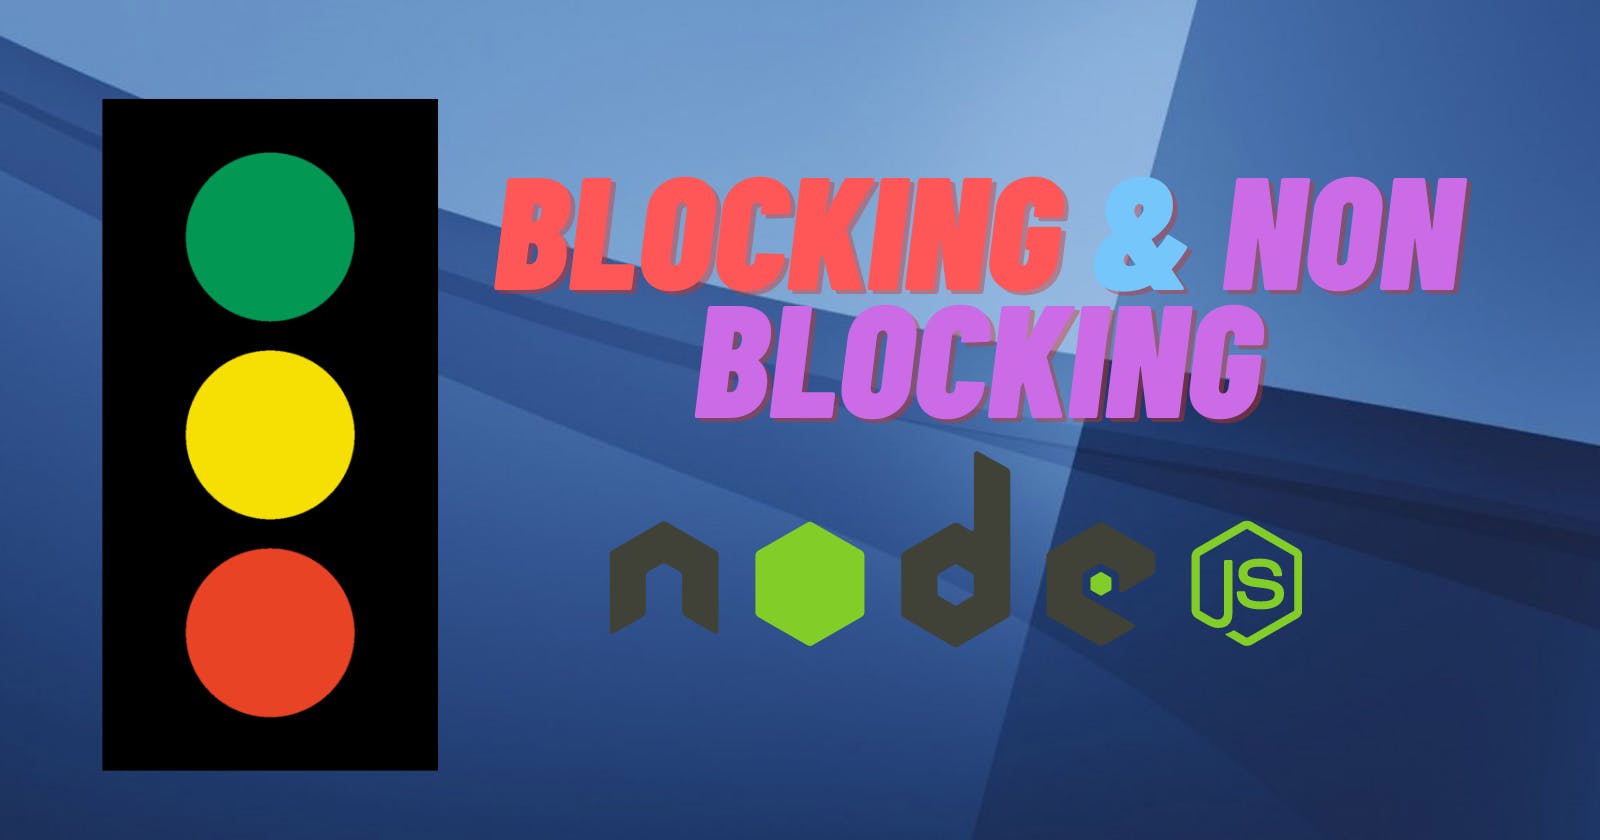 Blocking & Non Blocking in NodeJs